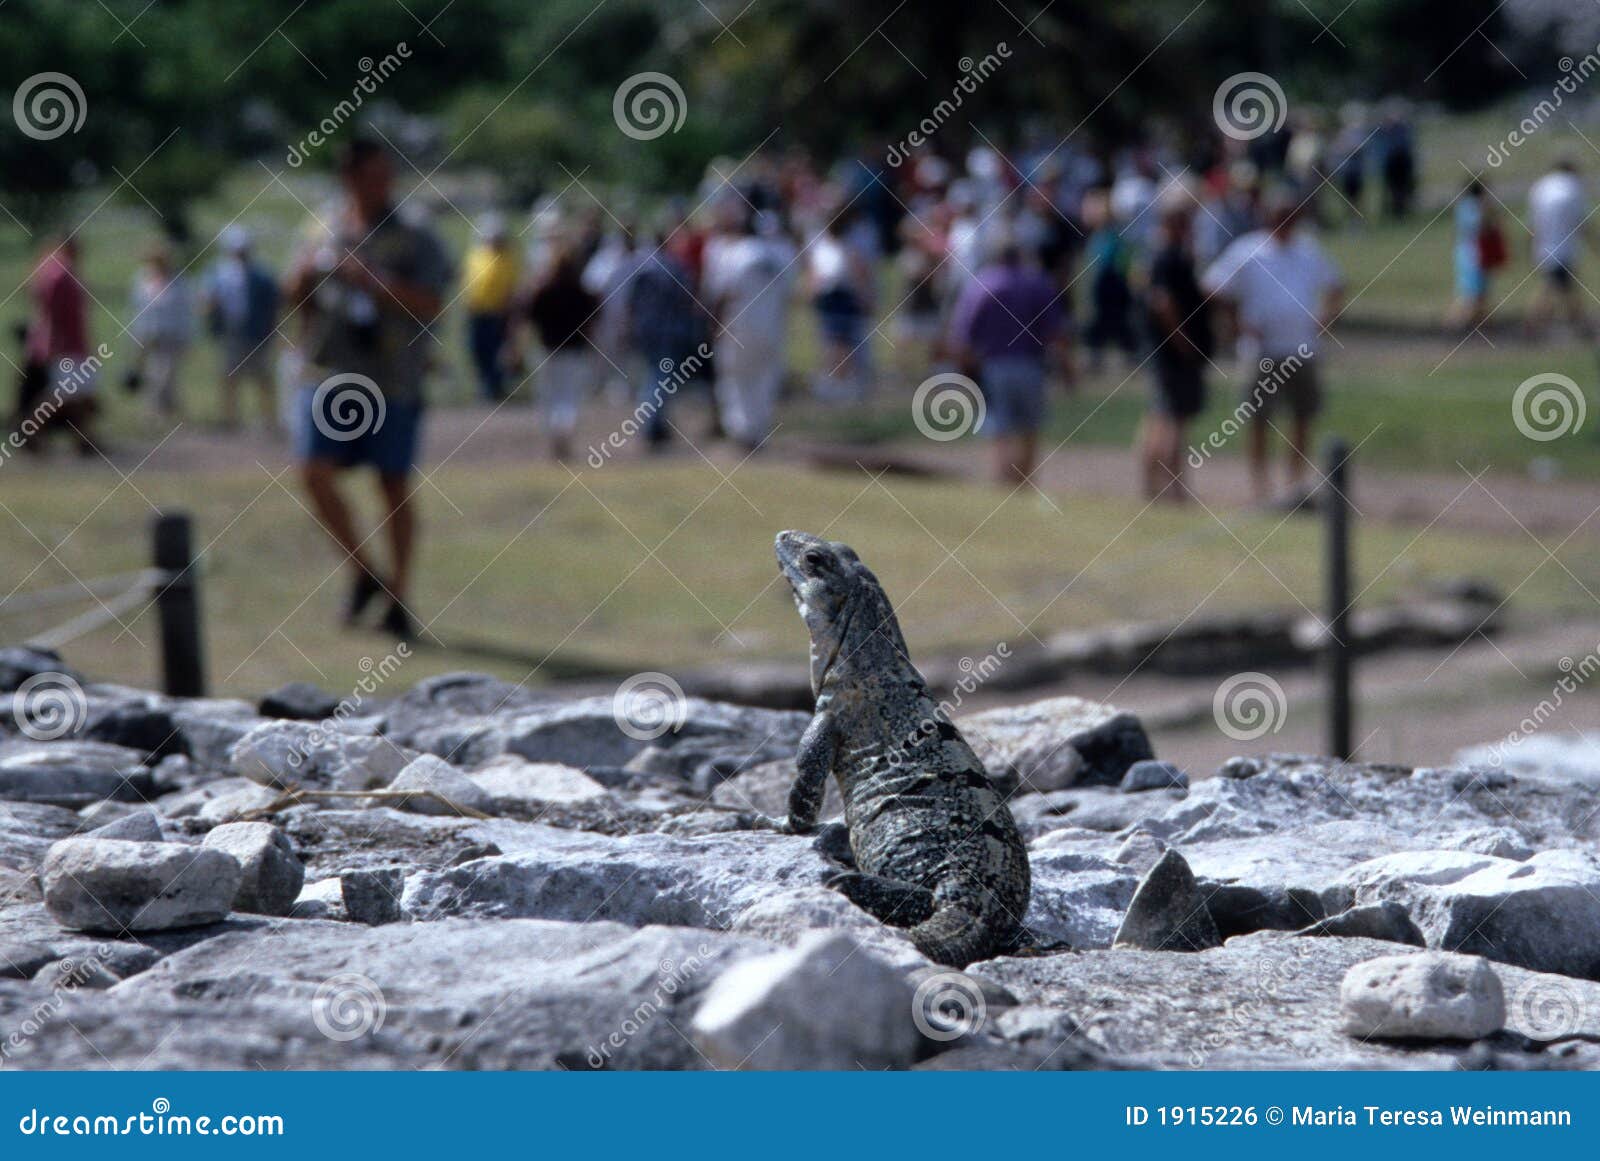 iguana, counting visitors